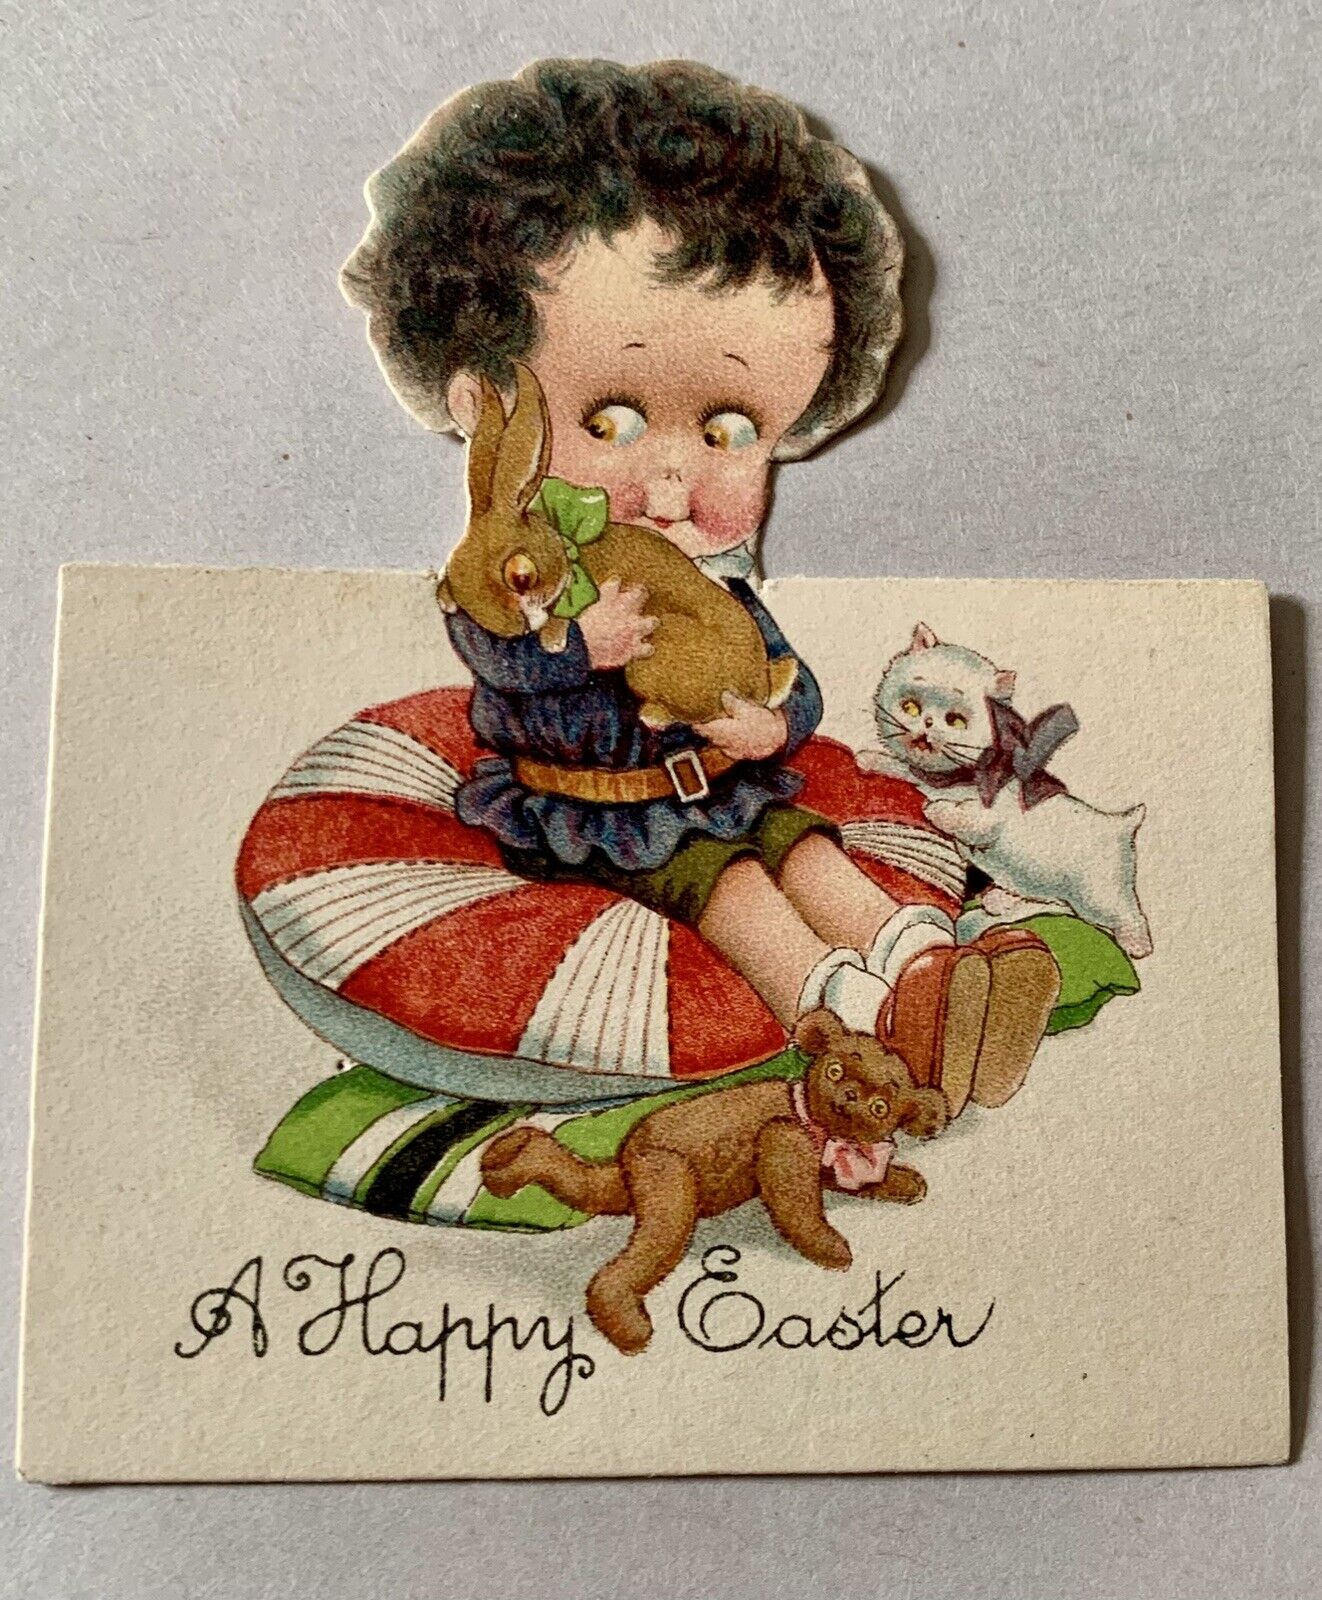 Vintage Die Cut Easter Card - Samuel Schmucker - Boy With Bunny  - Germany